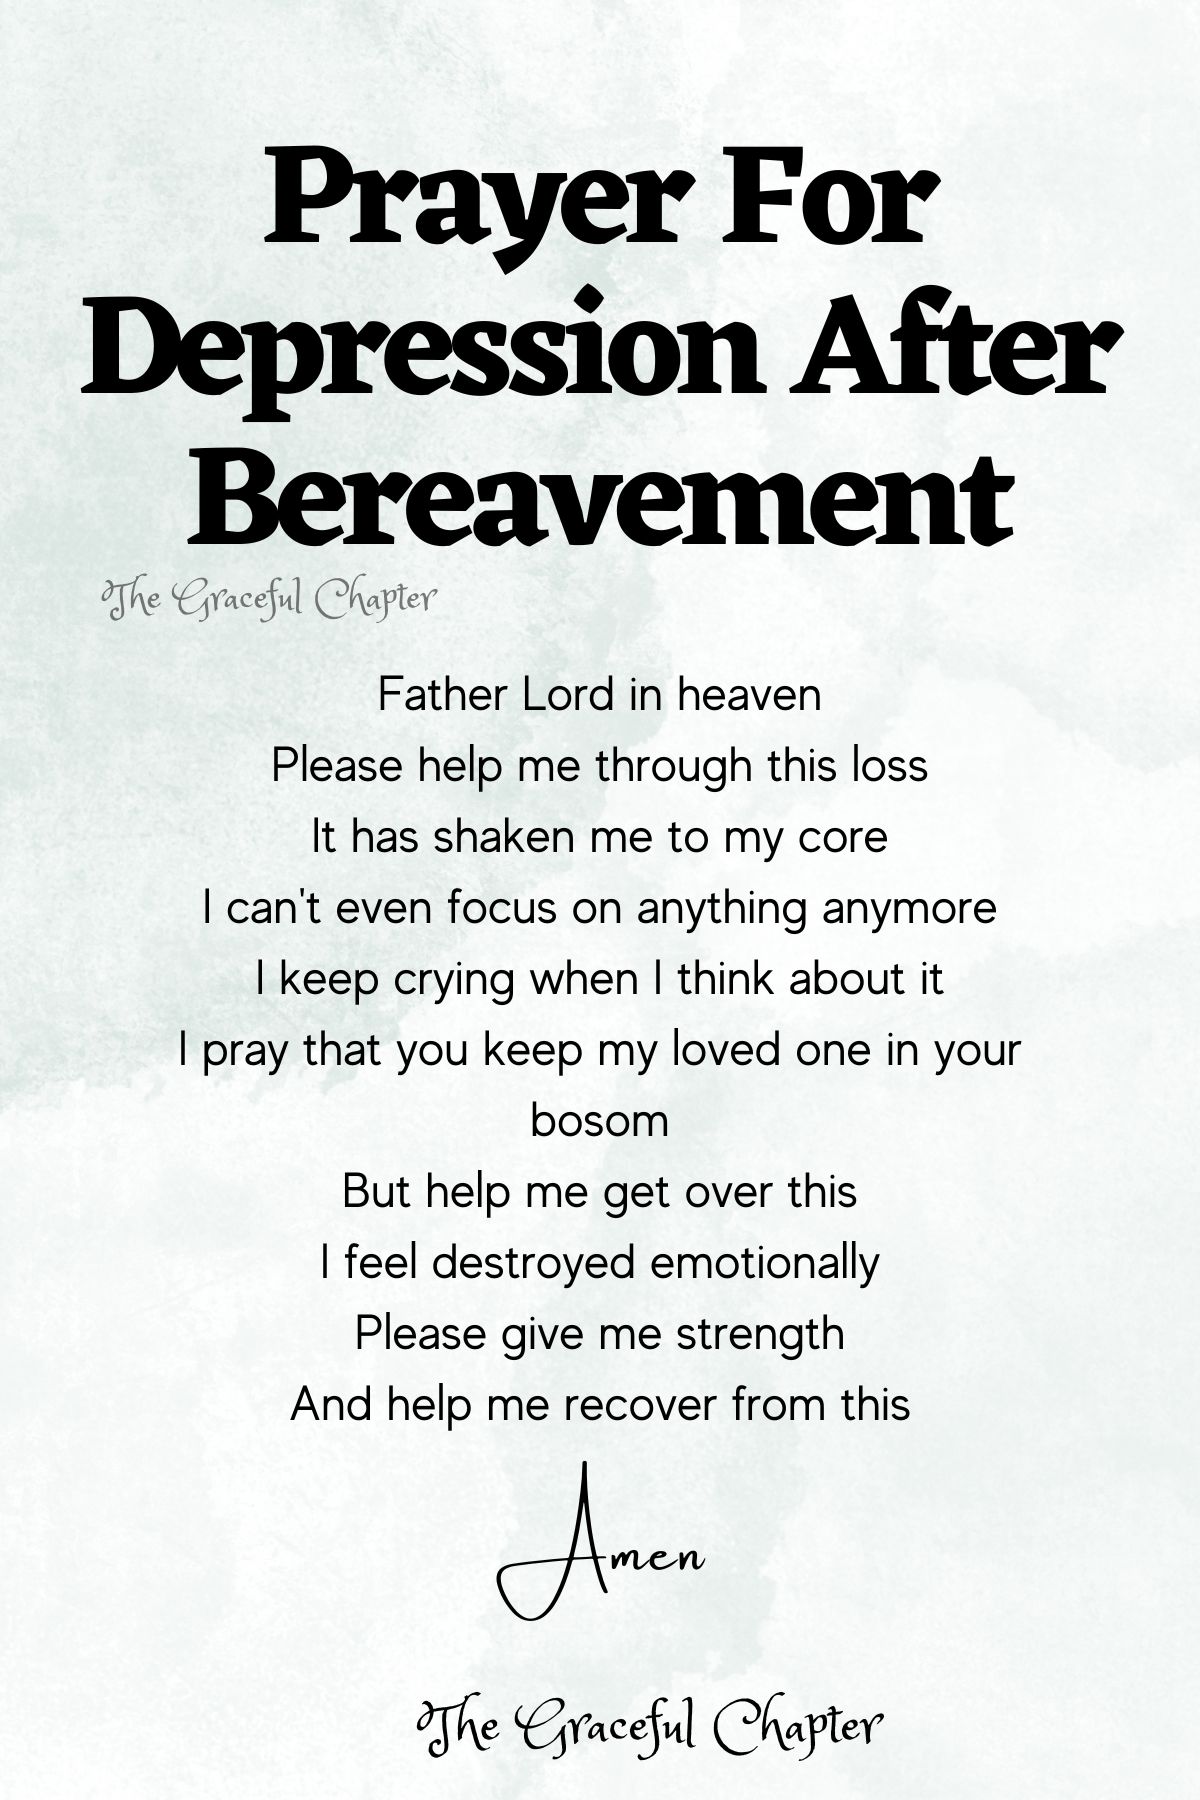 Prayer for depression after bereavement